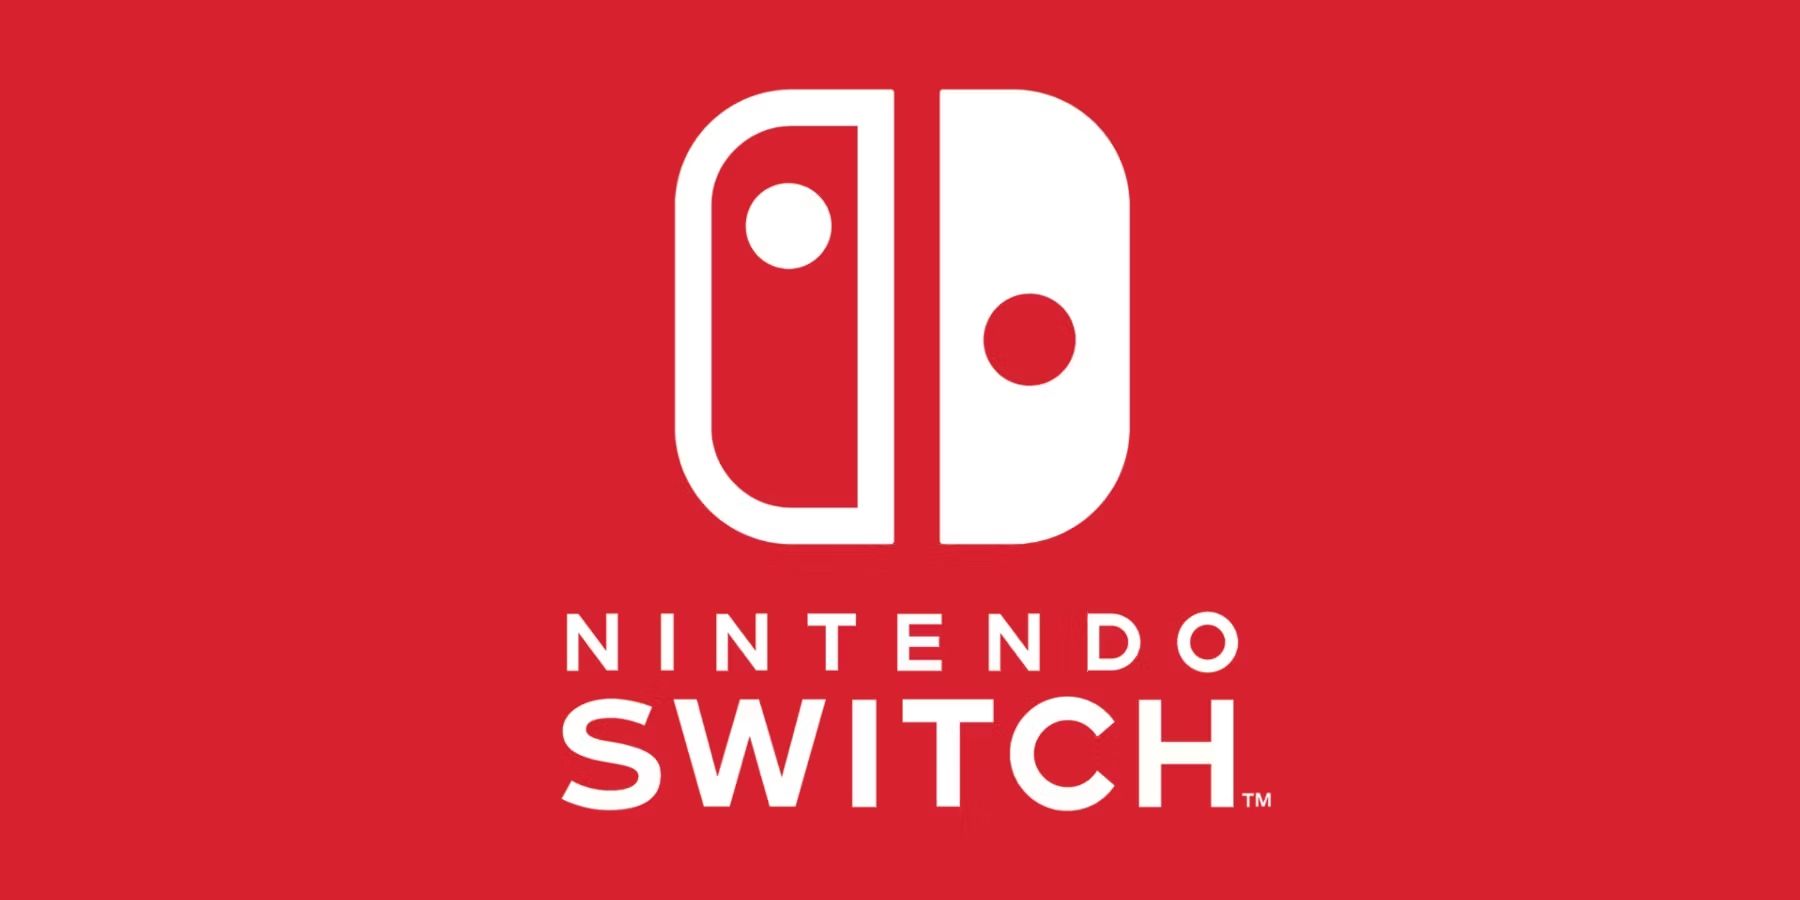 Nintendo switch logo on red background